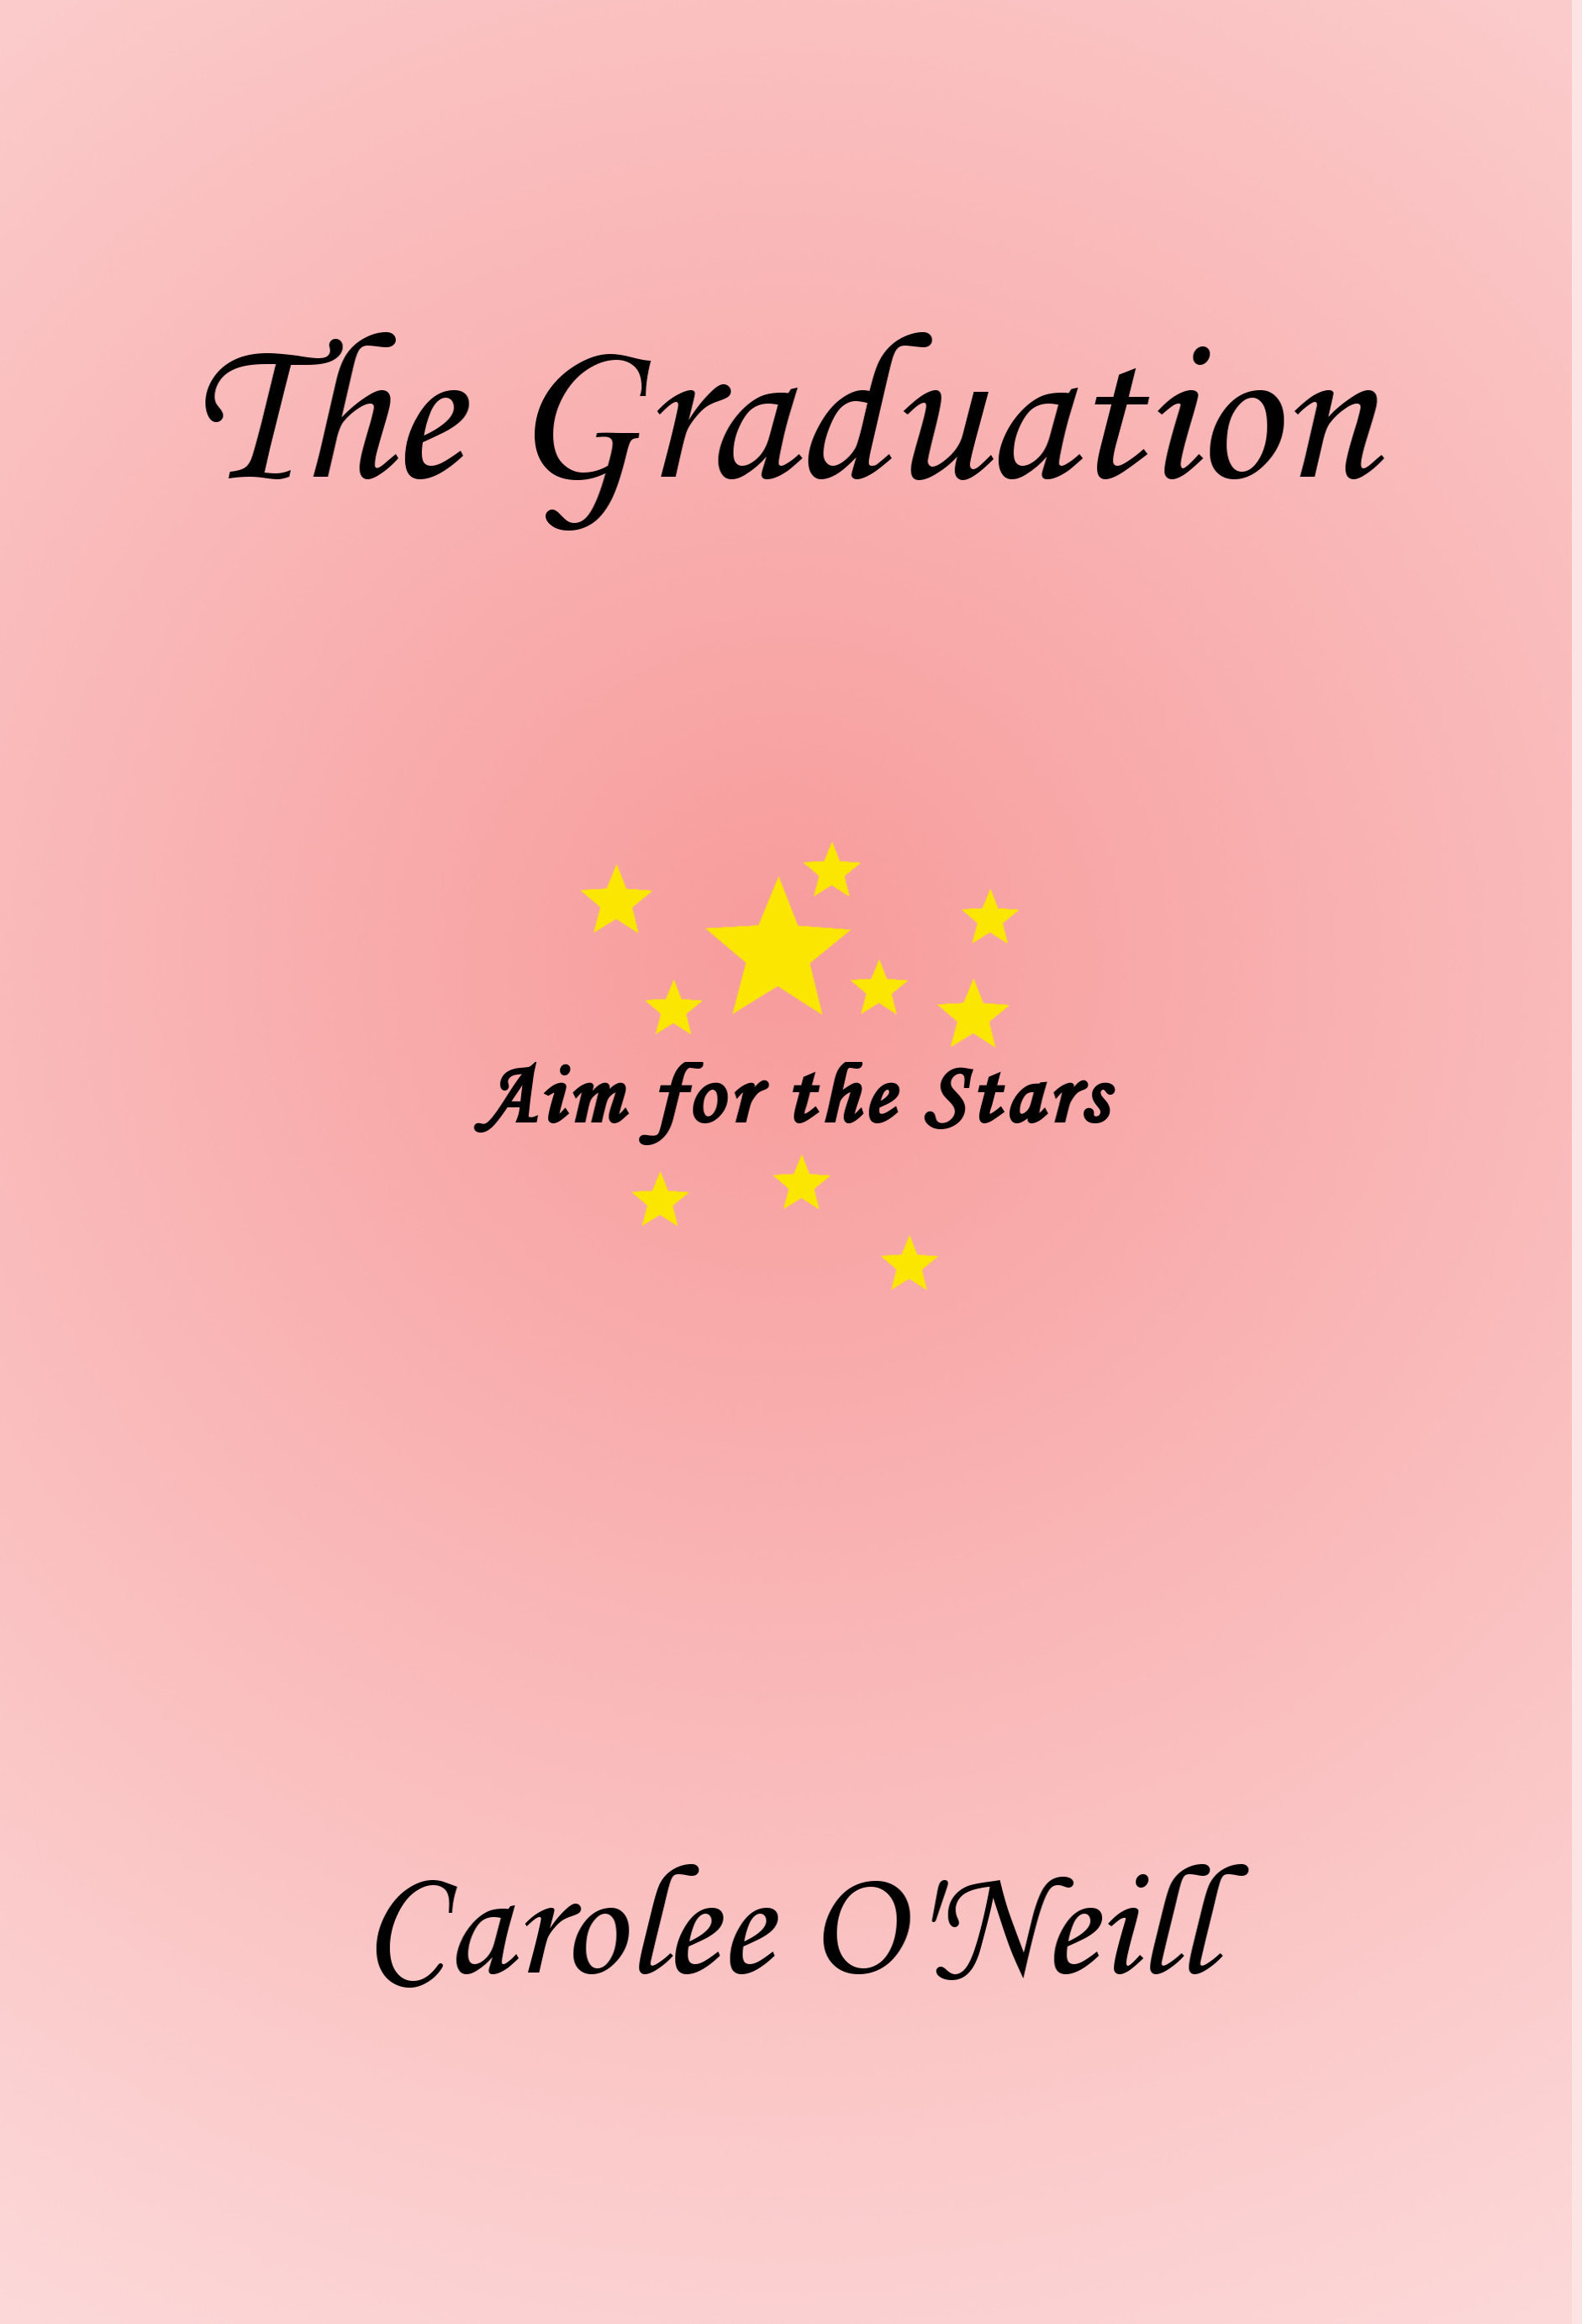 The Graduation frt 3 11 18 (1)